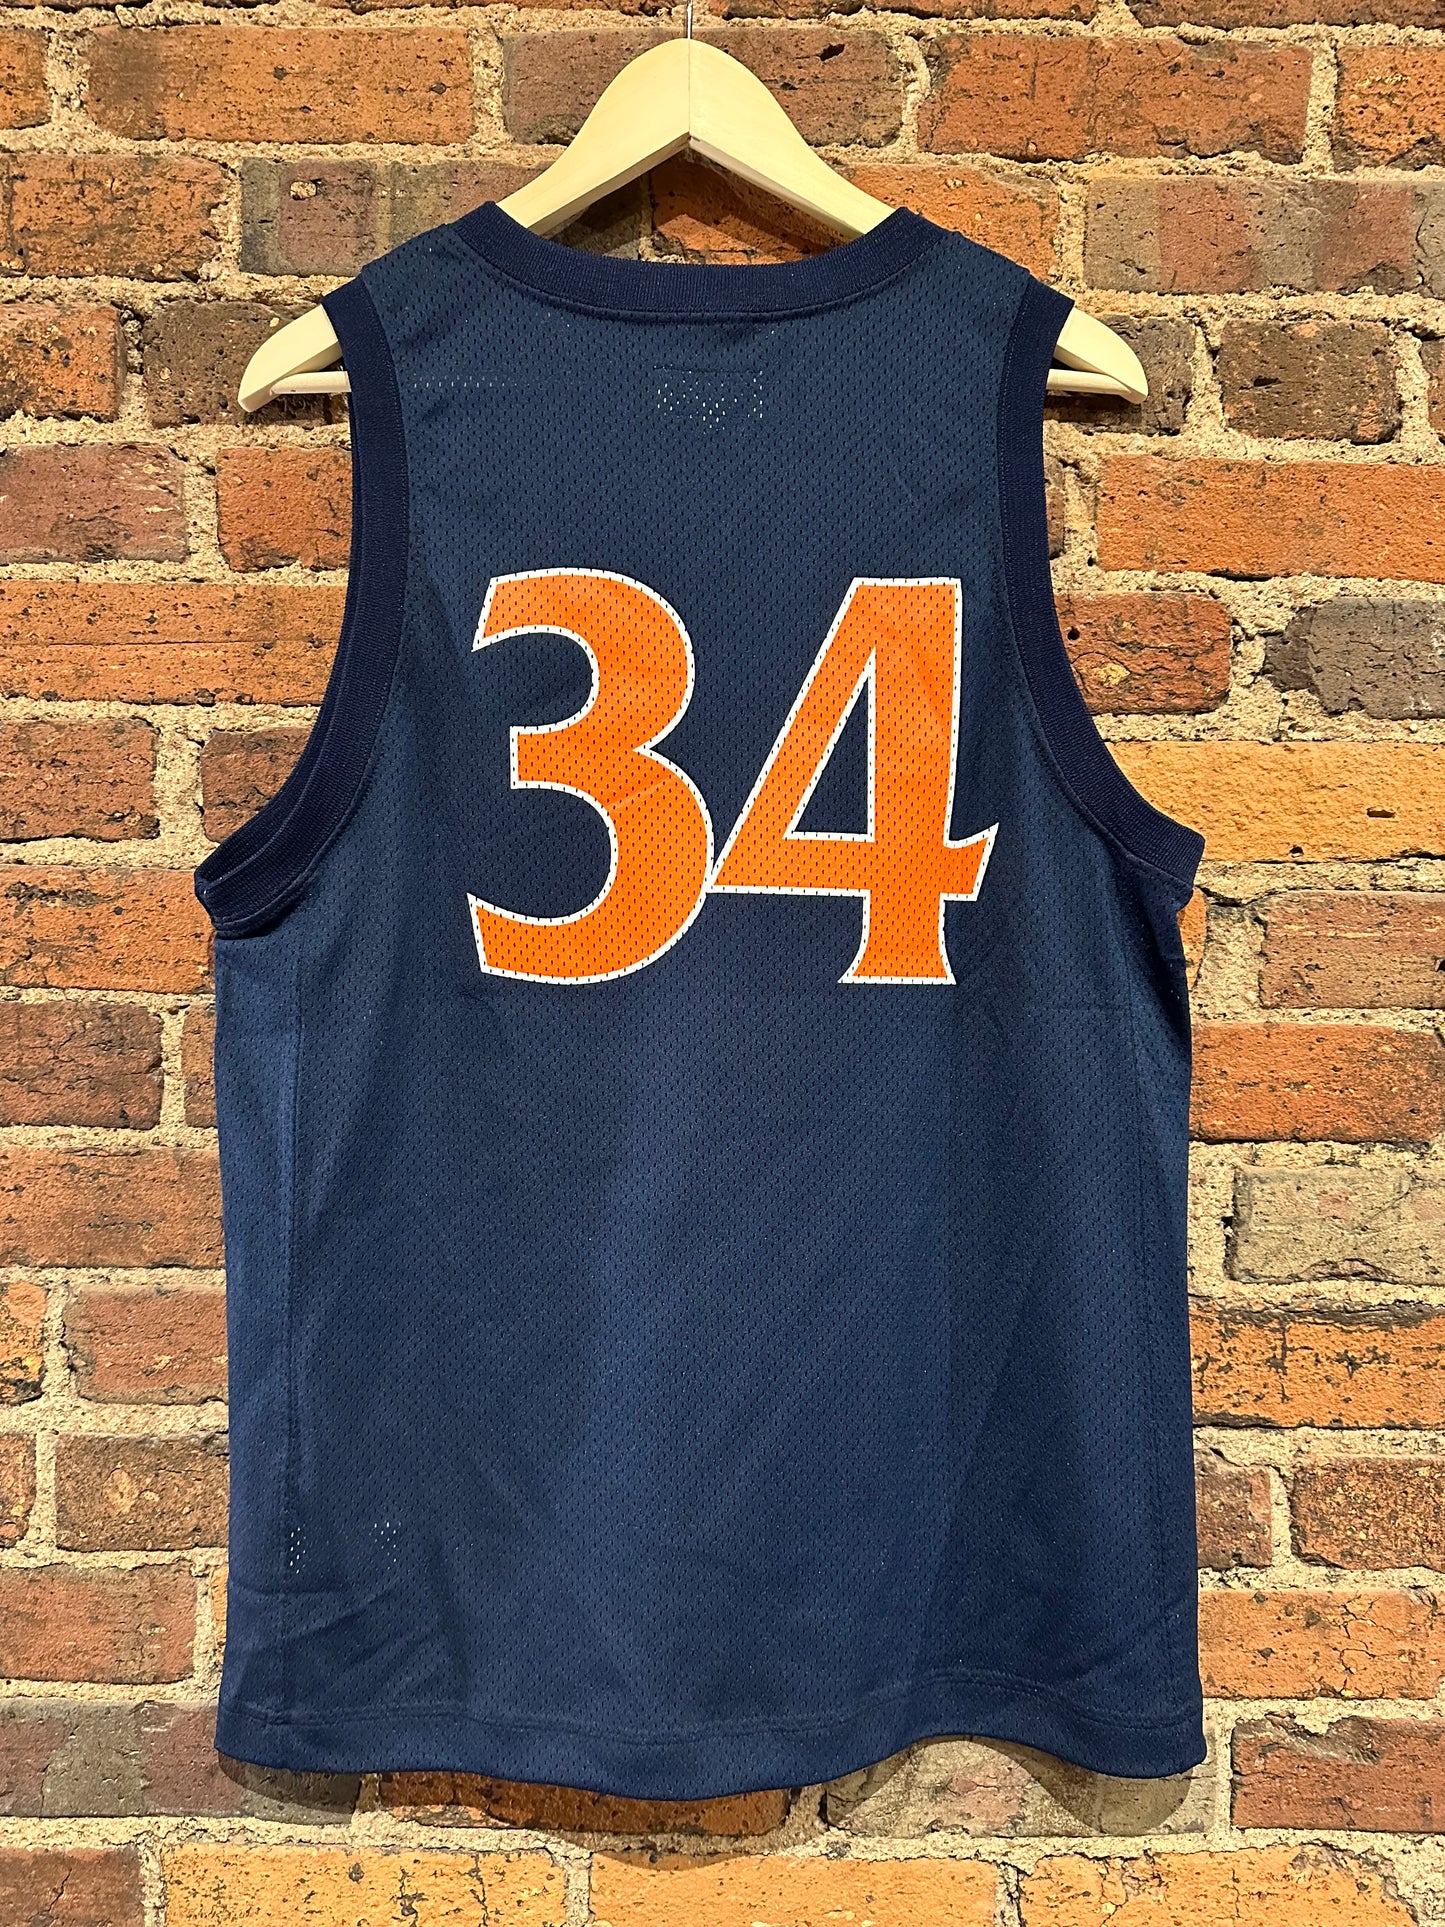 Auburn Charles Barkley #34 NCAA Jersey - Retro Brand